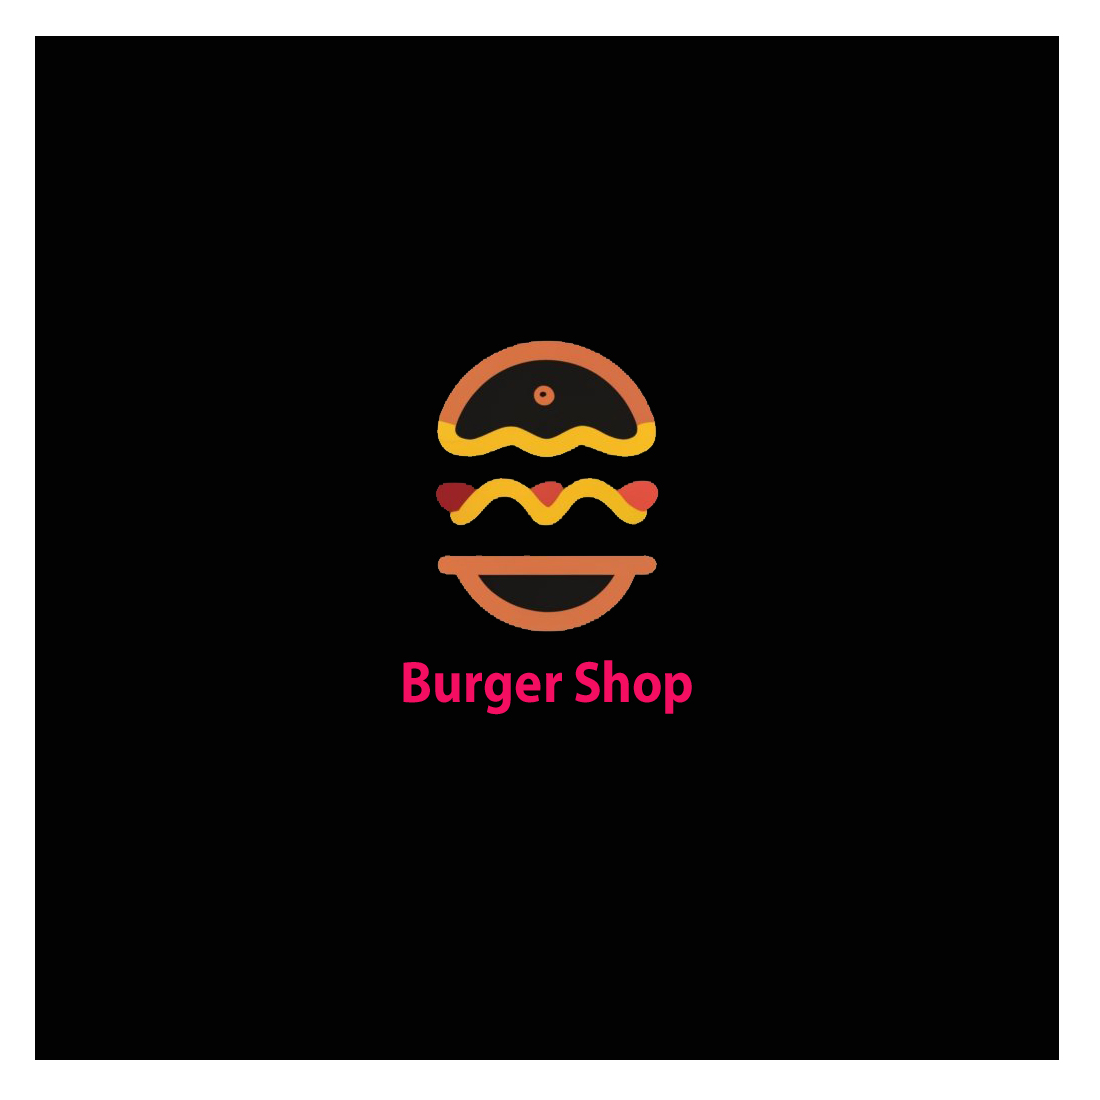 Burger Shop - Logo Design Template preview image.